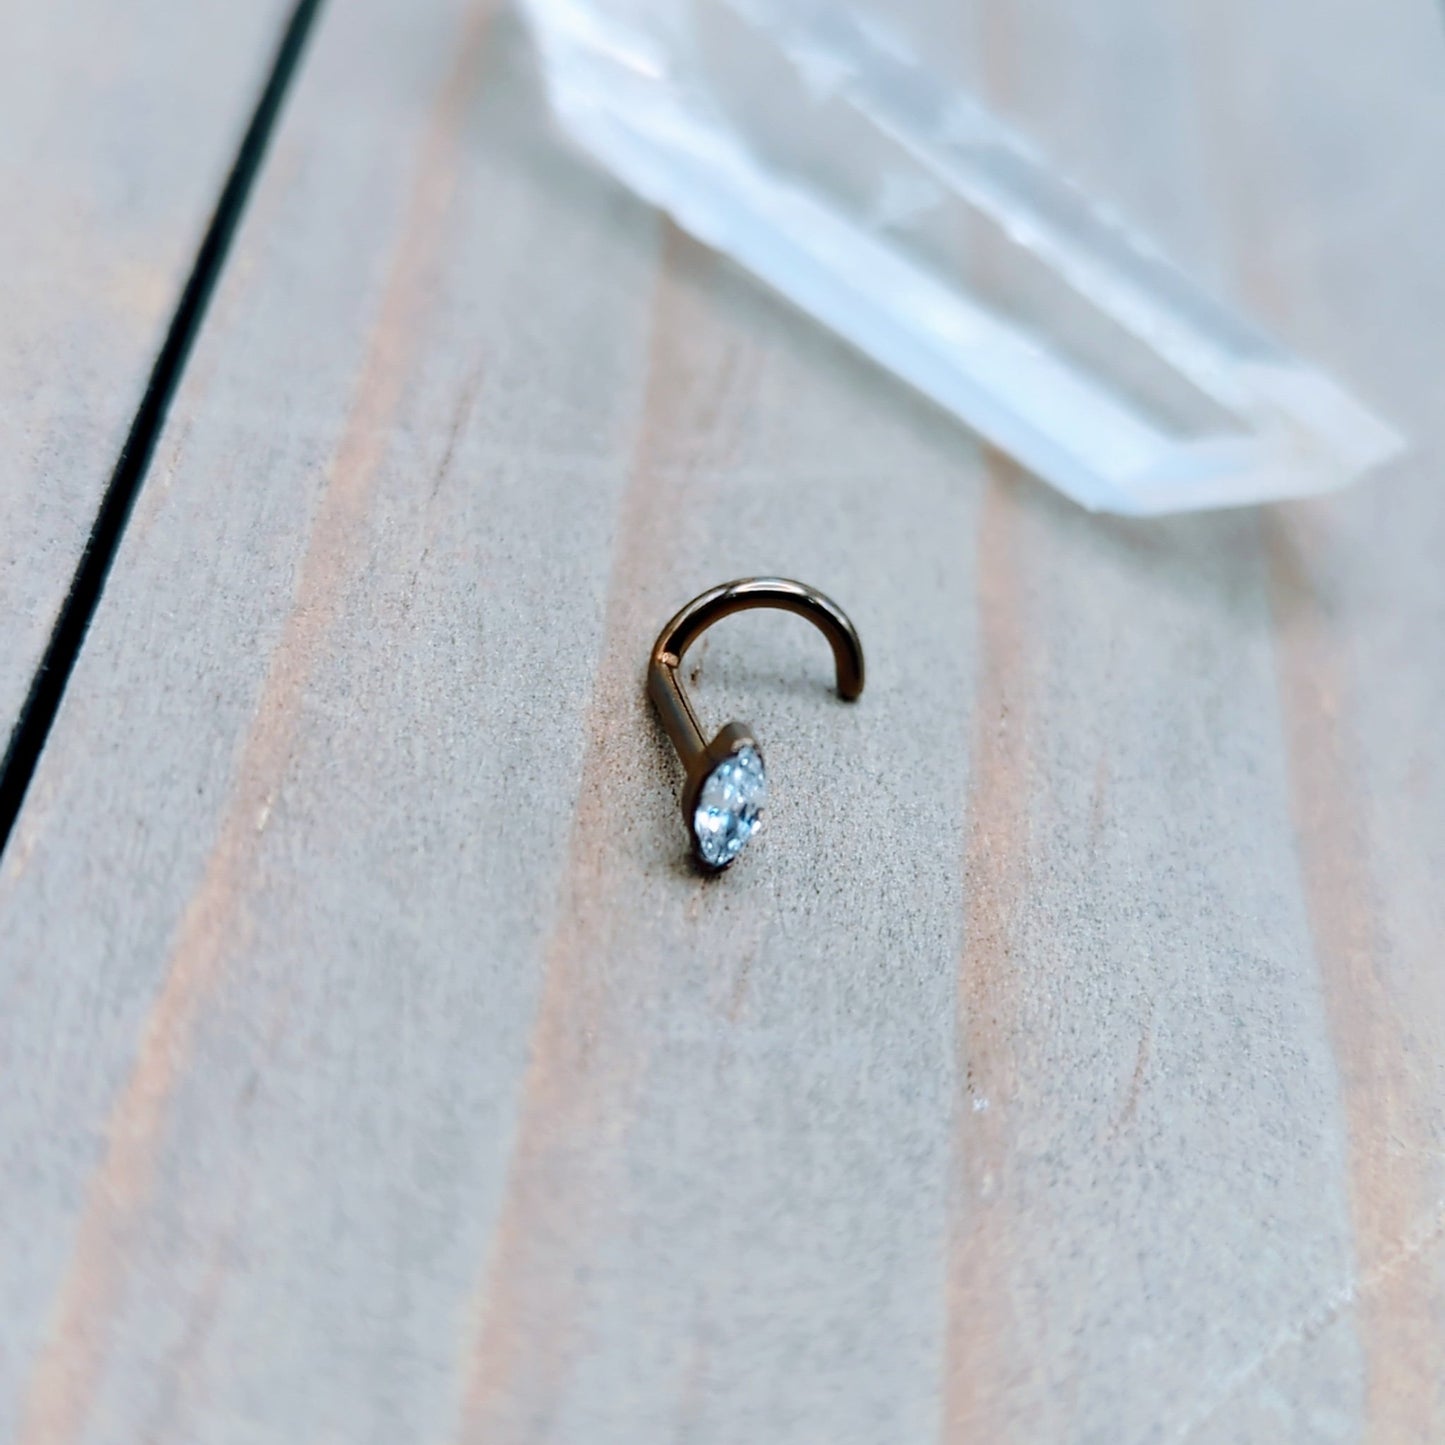 18g Titanium nose piercing jewelry marquise gemstone premium cubic zirconia clear nose piercing screw - Siren Body Jewelry